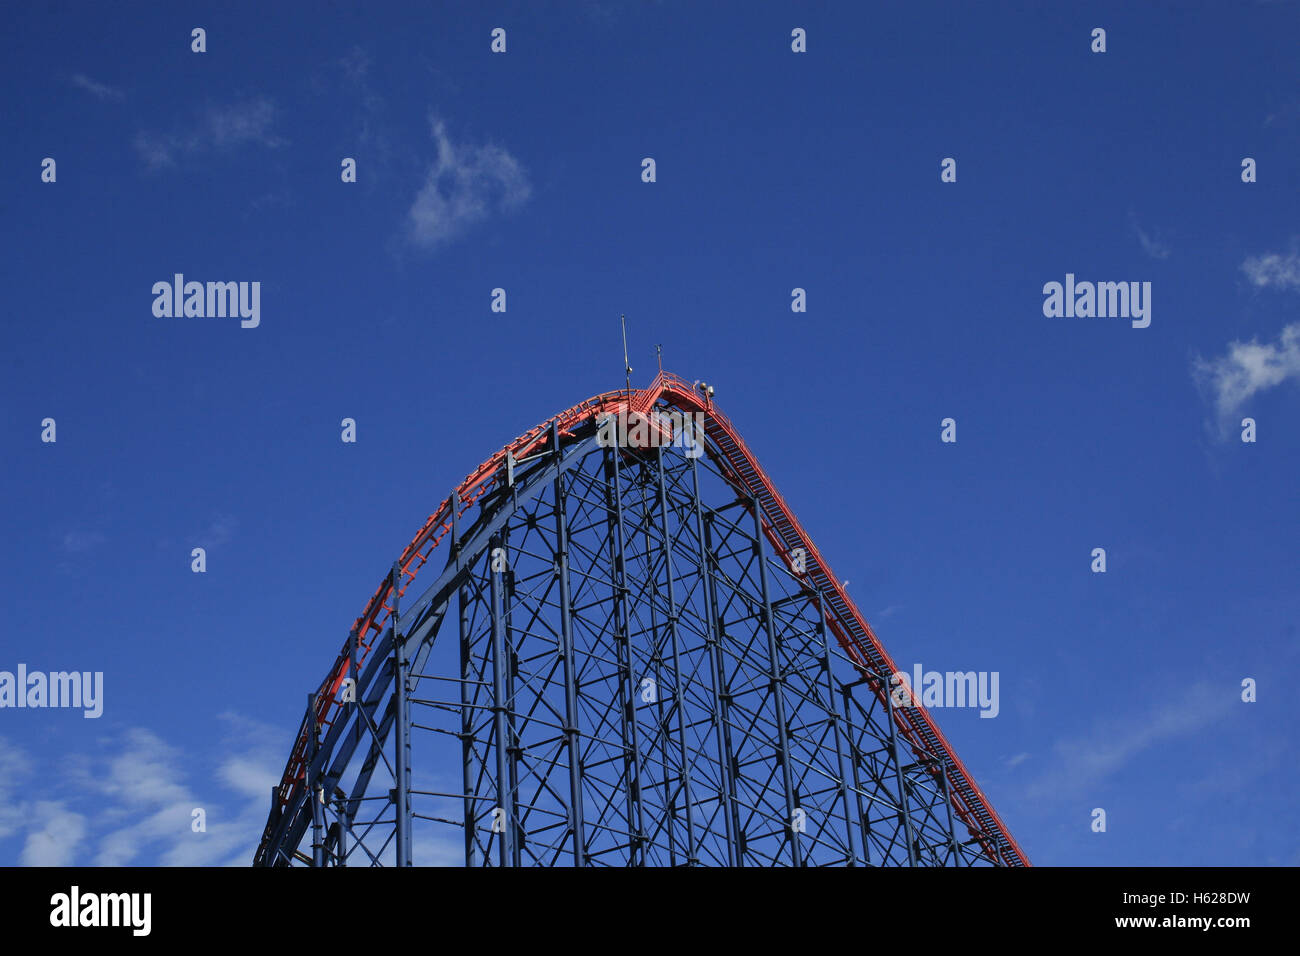 Pepsi Max rollercoaster, Blackpool, Lancashire, UK Banque D'Images